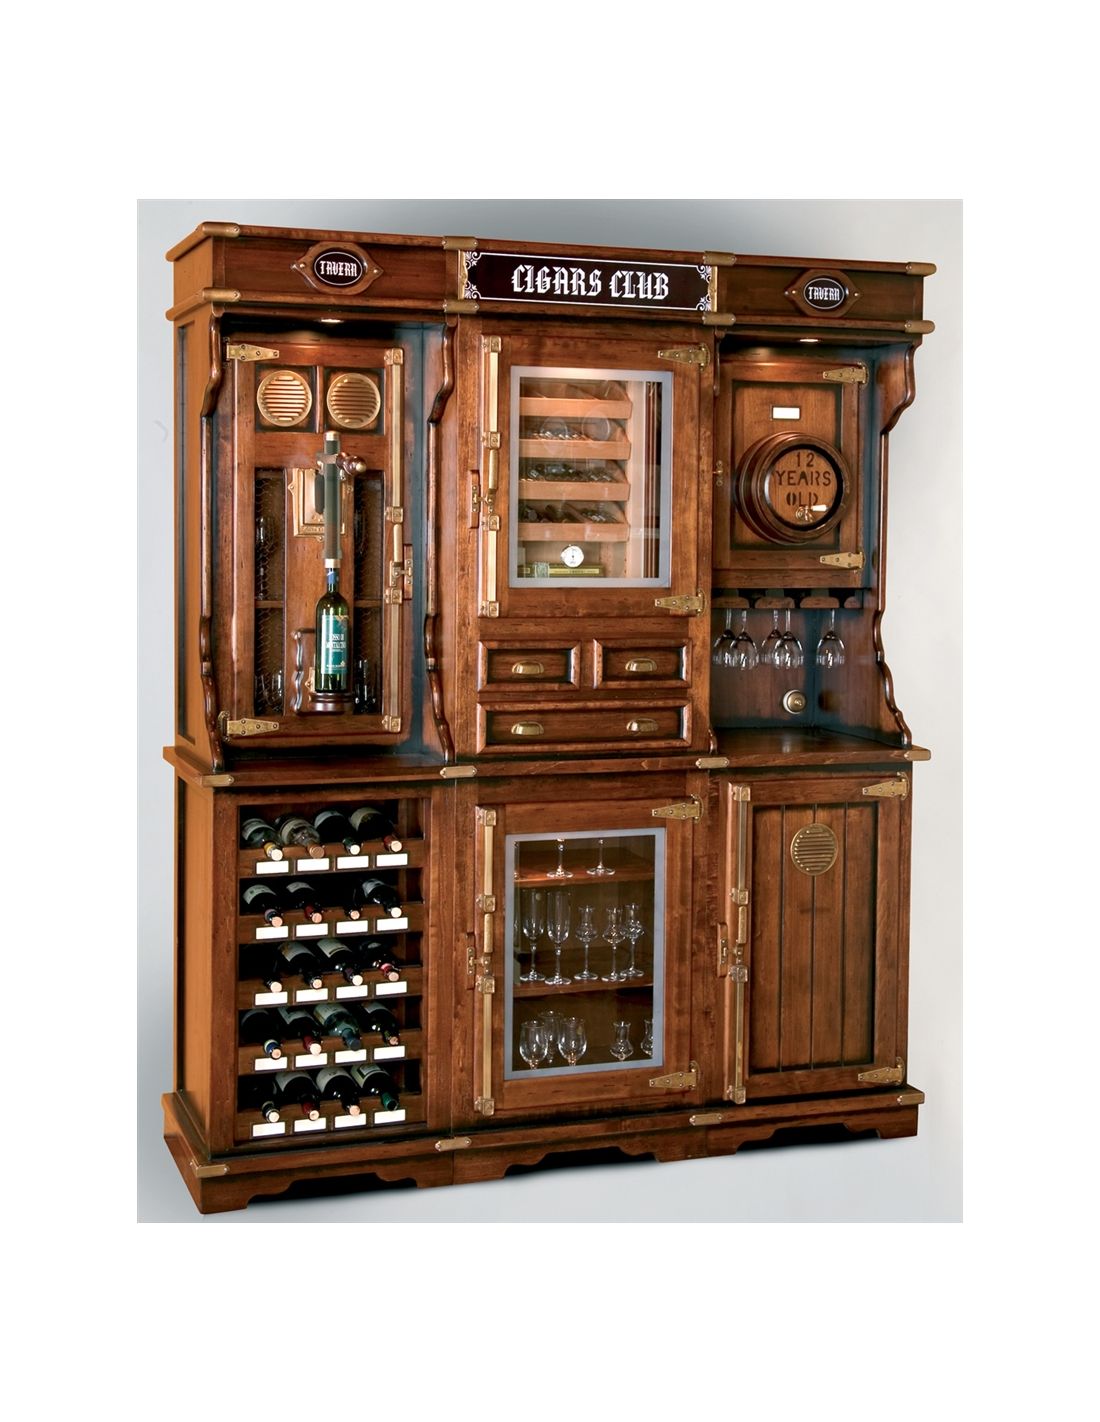 Unique cigar wine cabinet with a